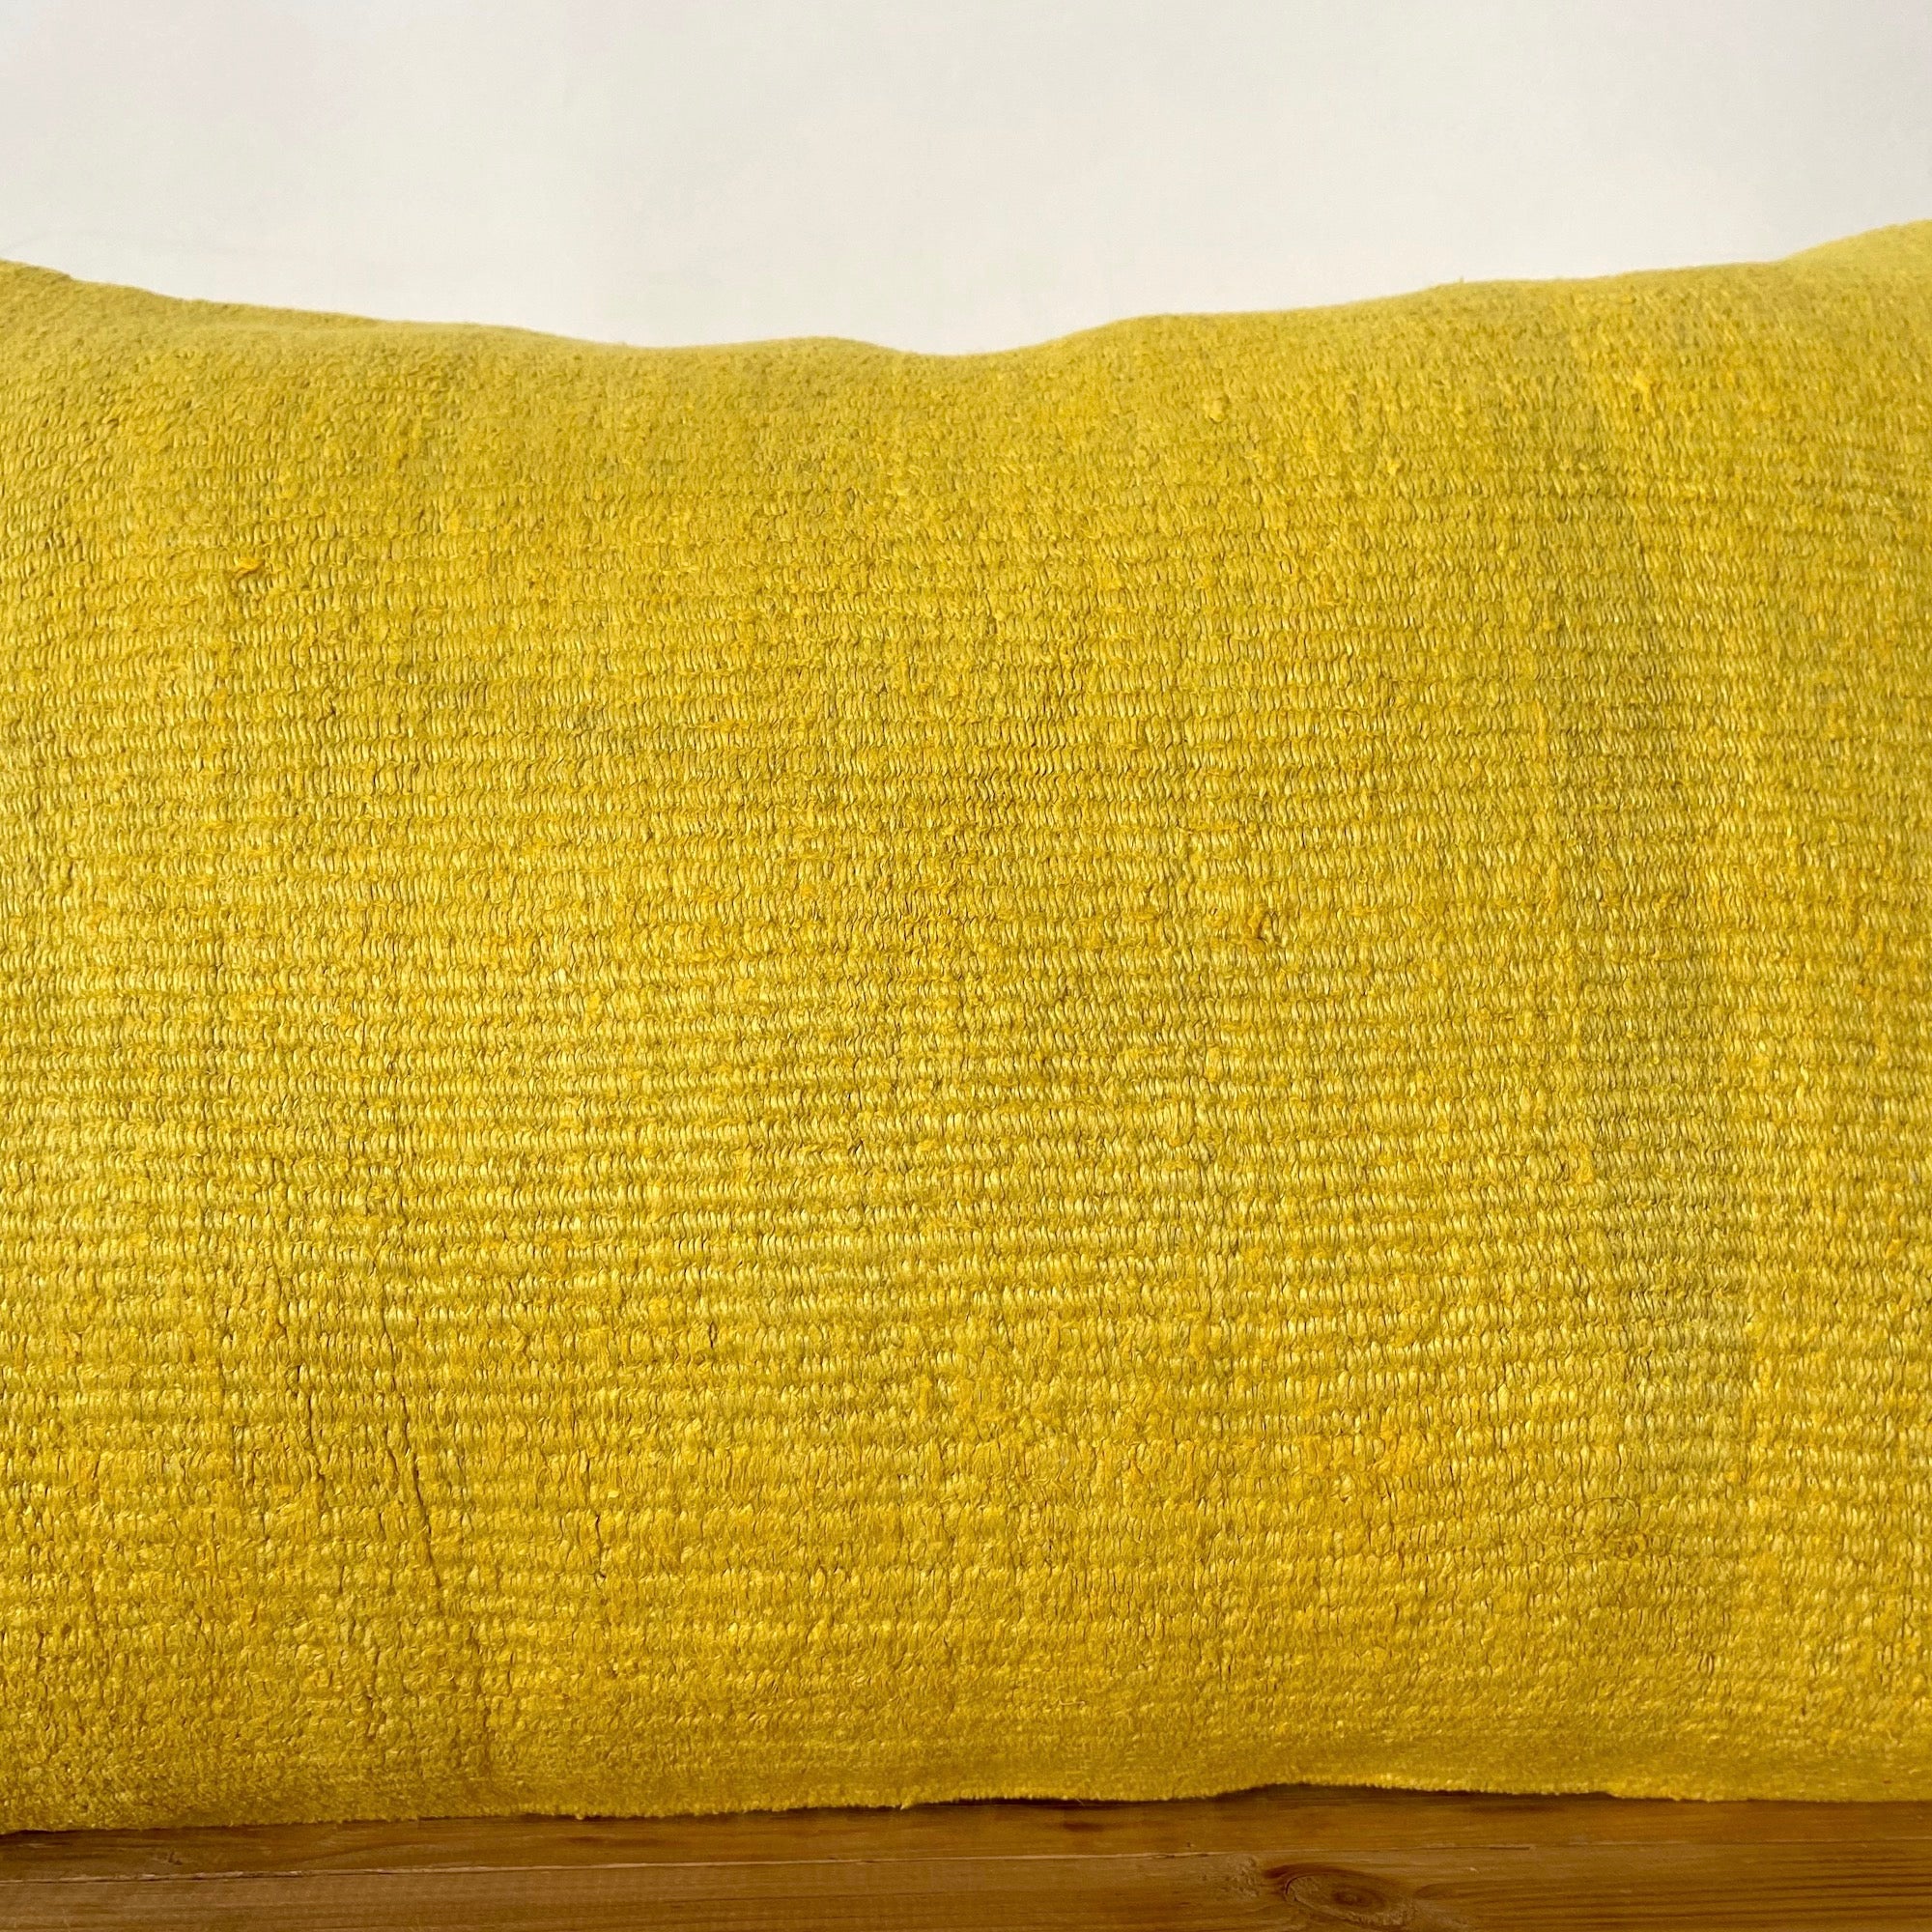 Gilde - Yellow Hemp Pillow Cover - kudenrugs